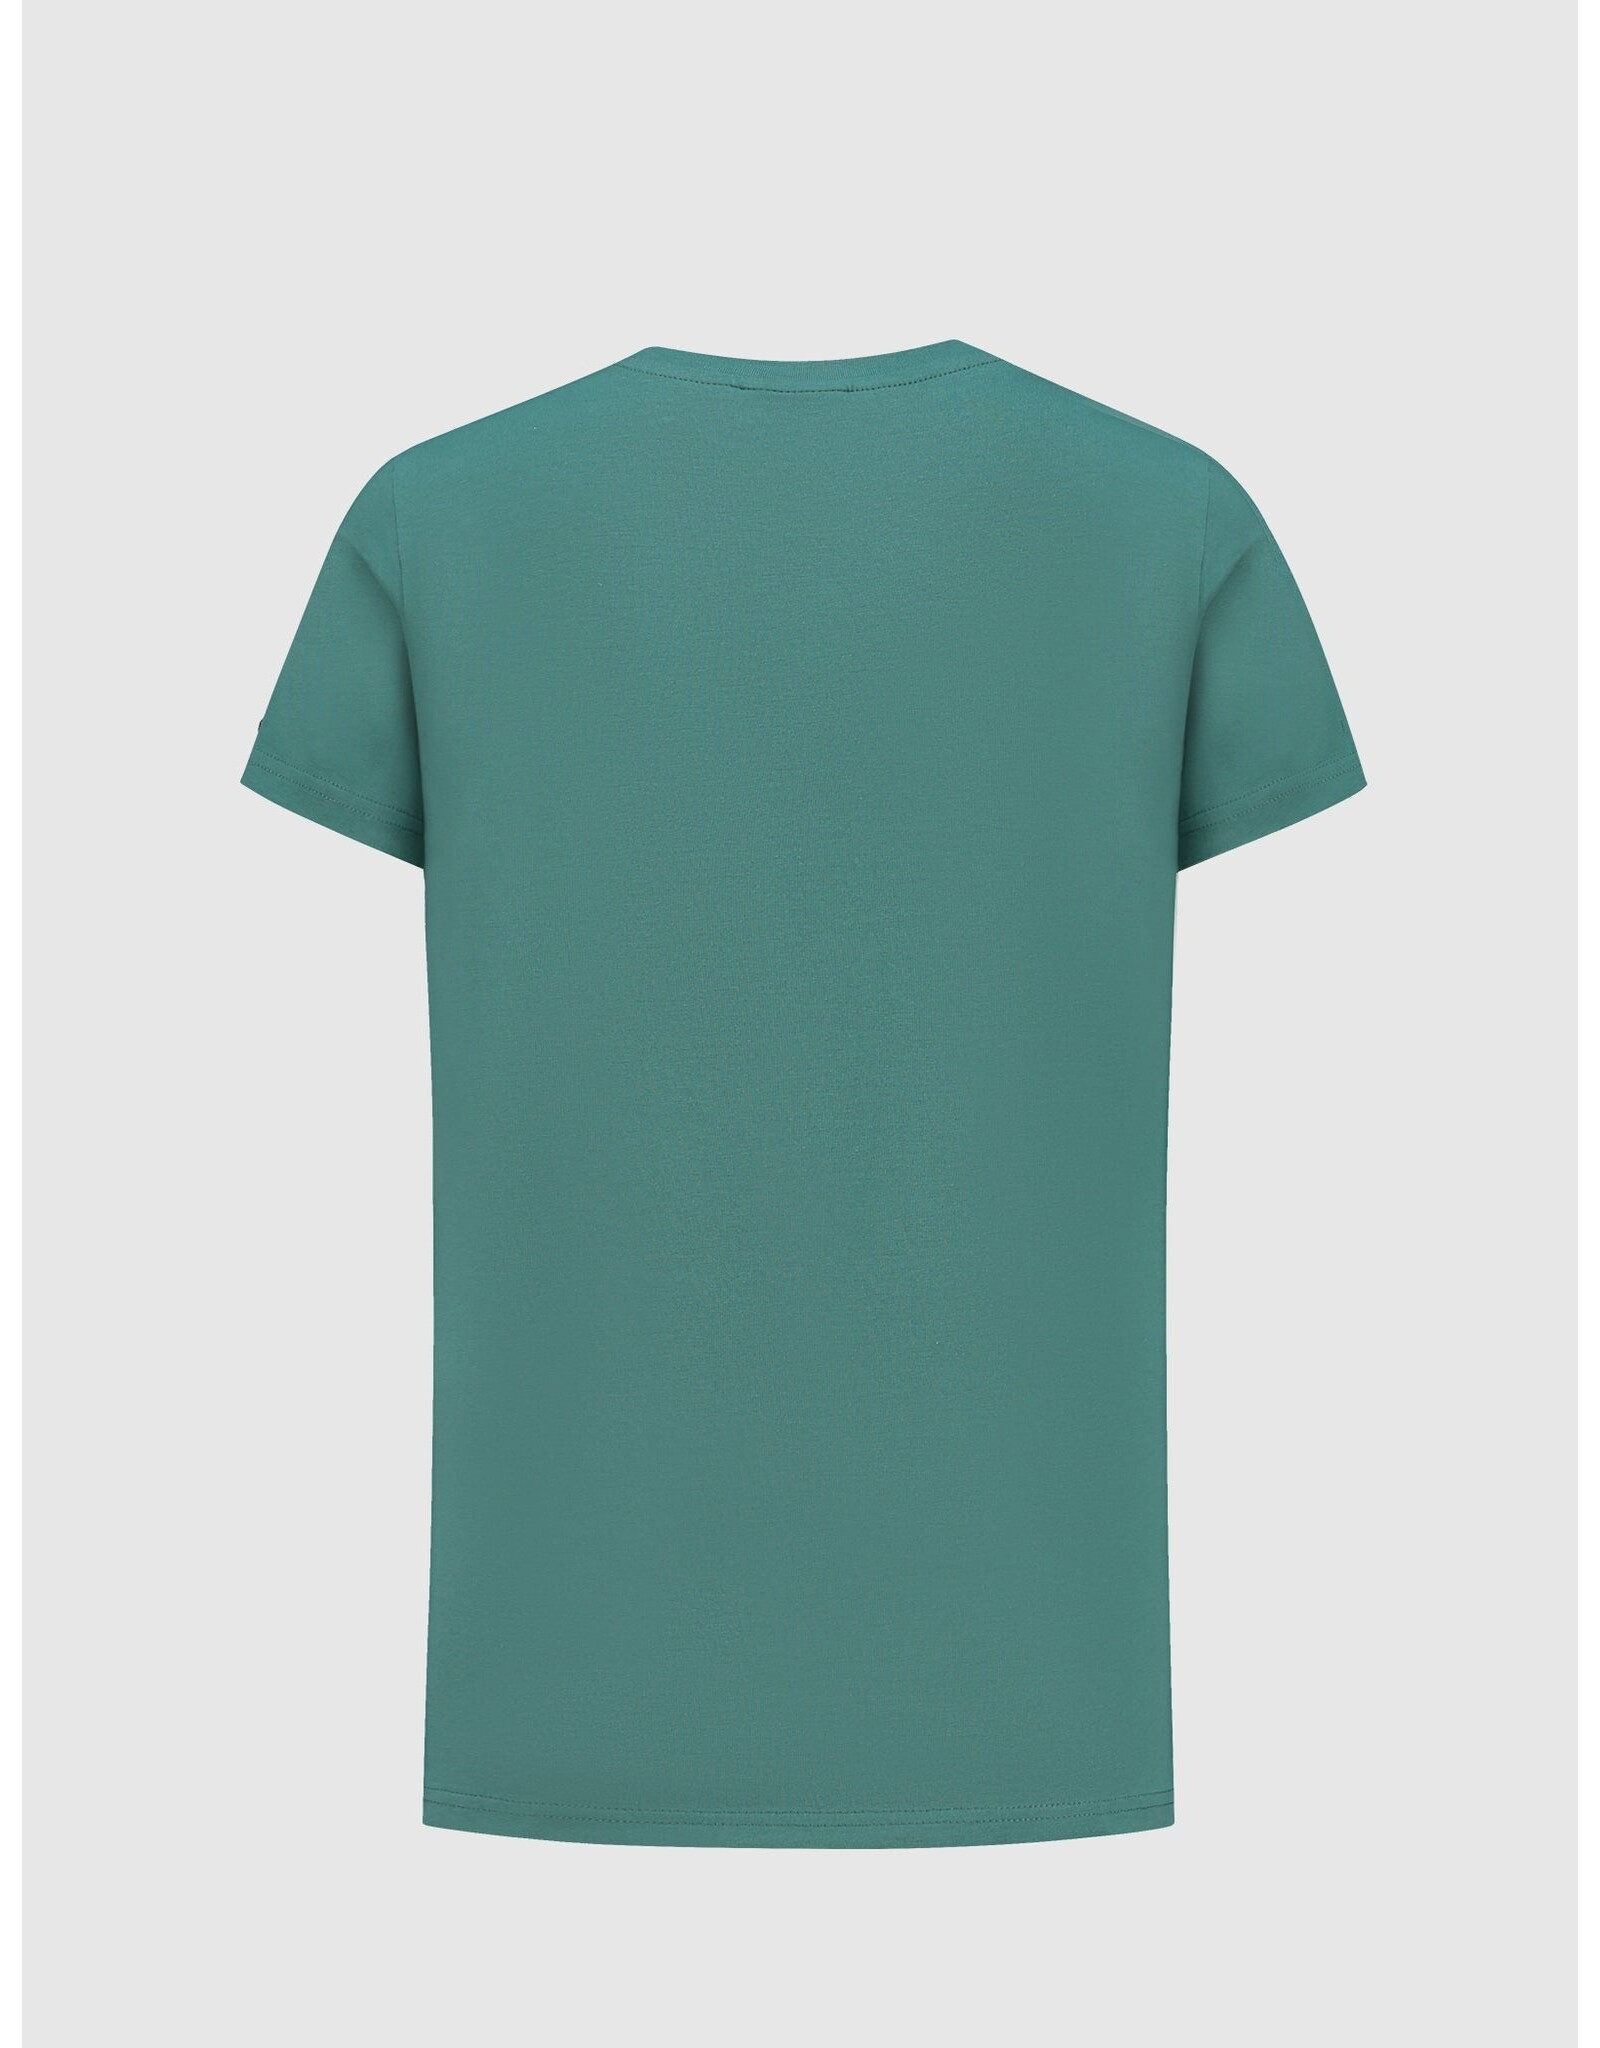 Ballin Amsterdam T-shirt with frontprint Faded Green 24017117